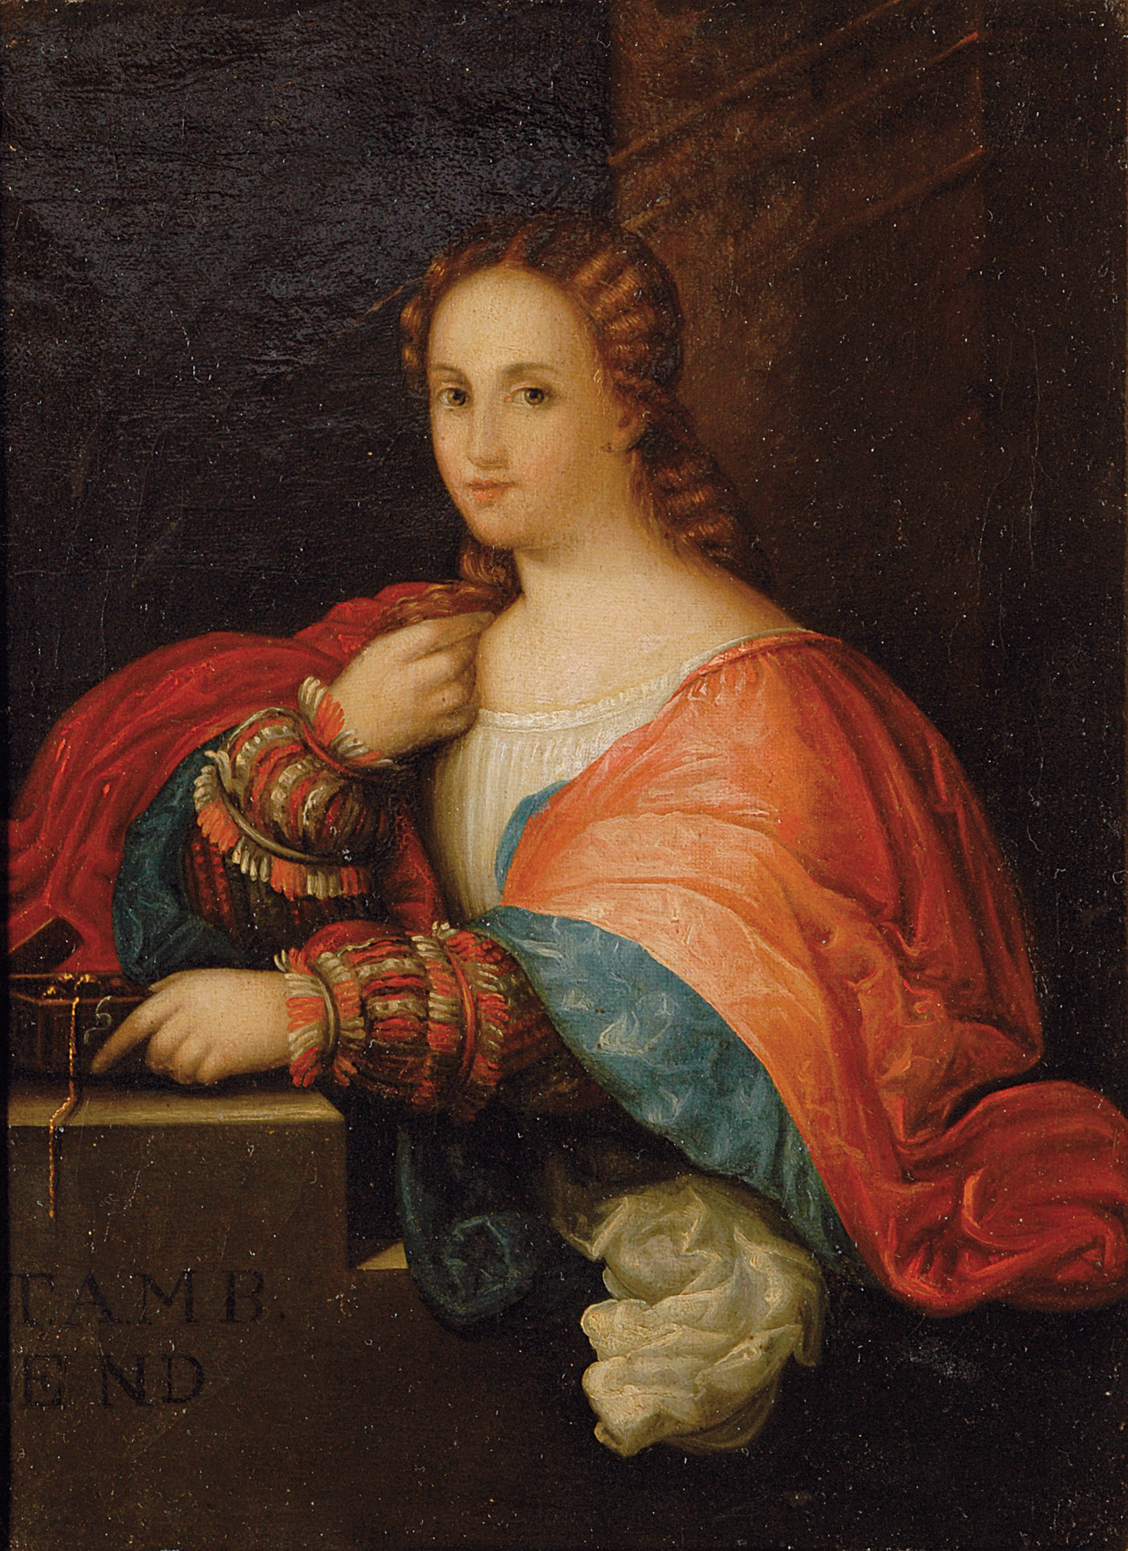 A portrait of a lady - 'La bella'